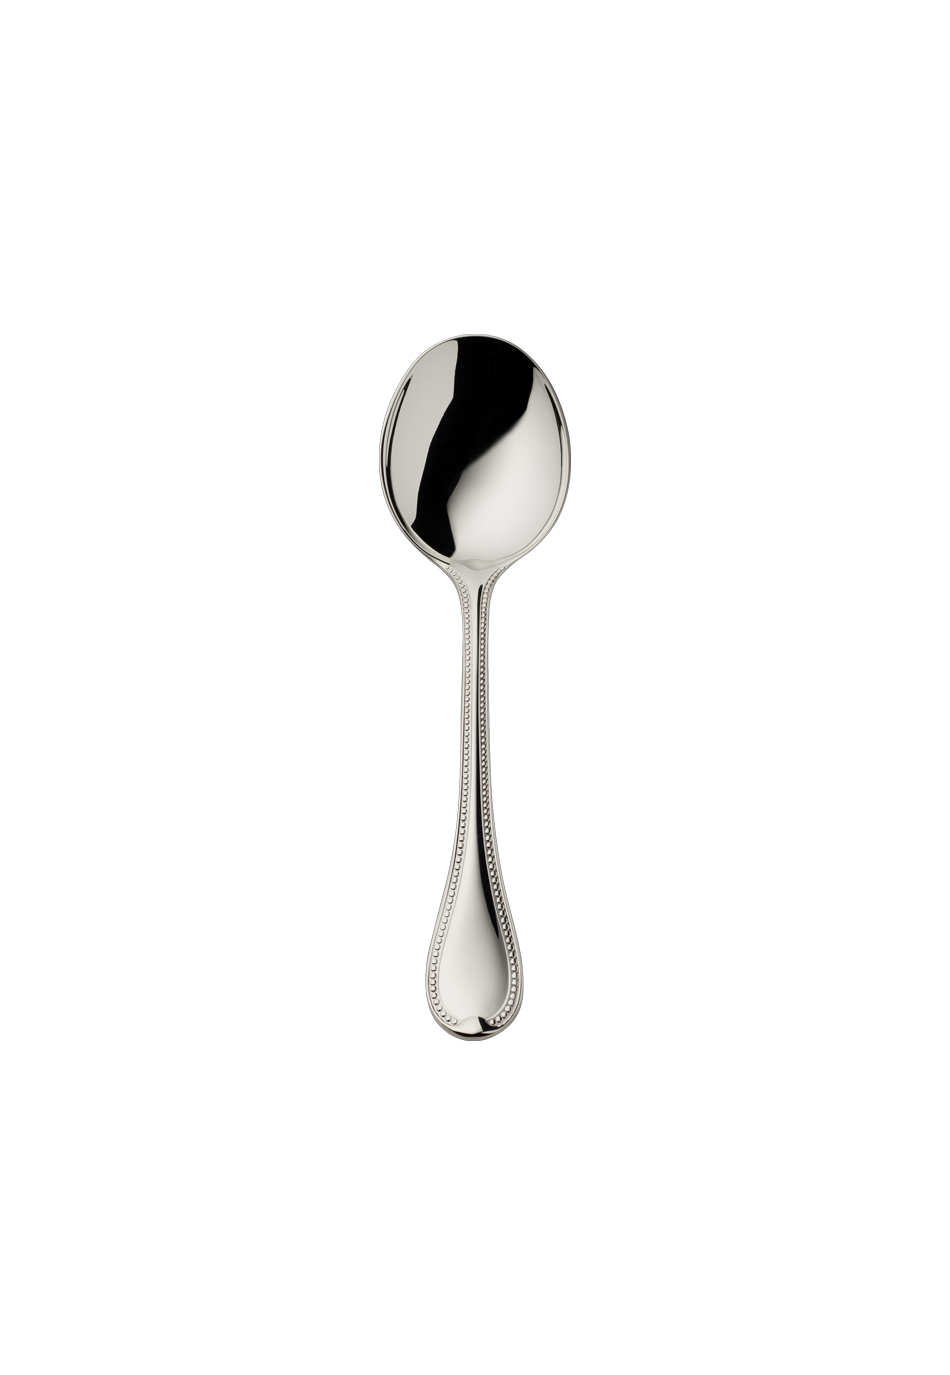 Franz. Perl Cream Spoon (Broth Spoon) (150g massive silverplated)